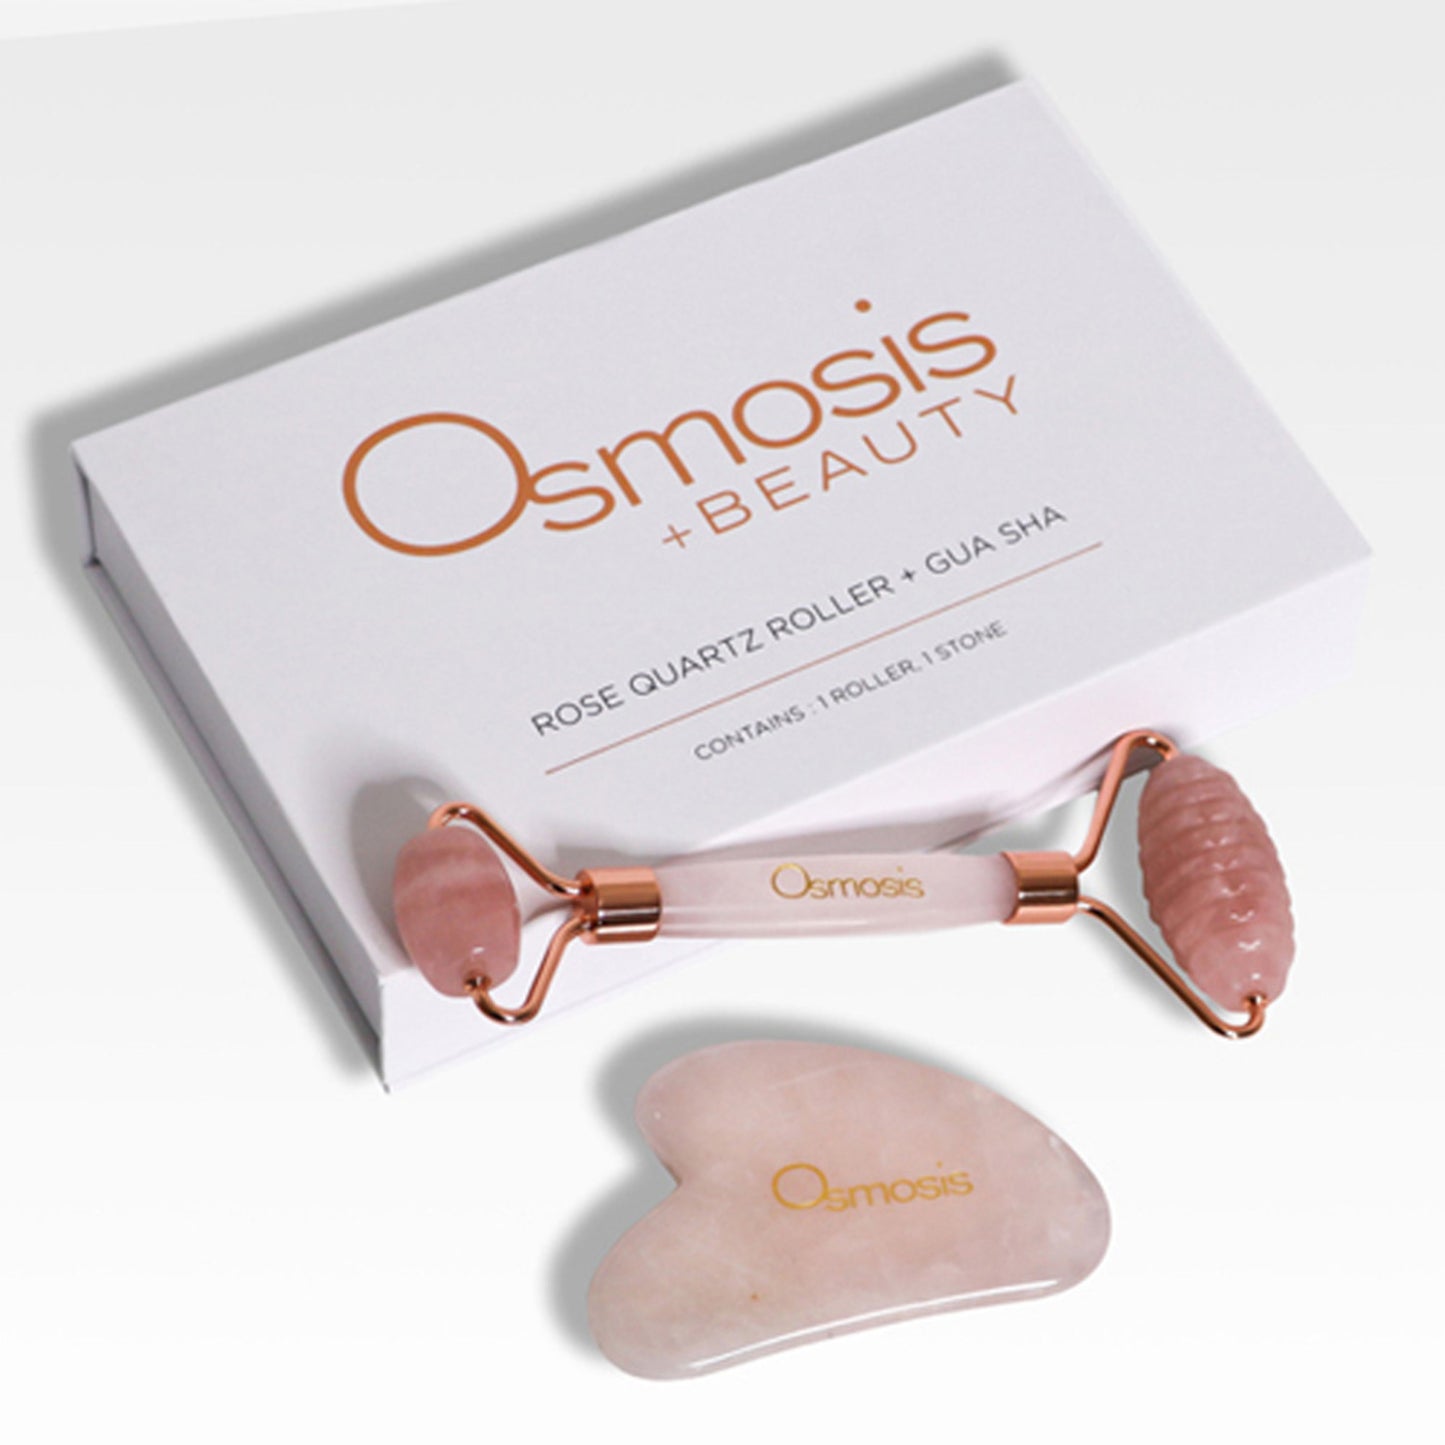 Osmosis Professional Rose Quartz Facial Roller and Gua Sha